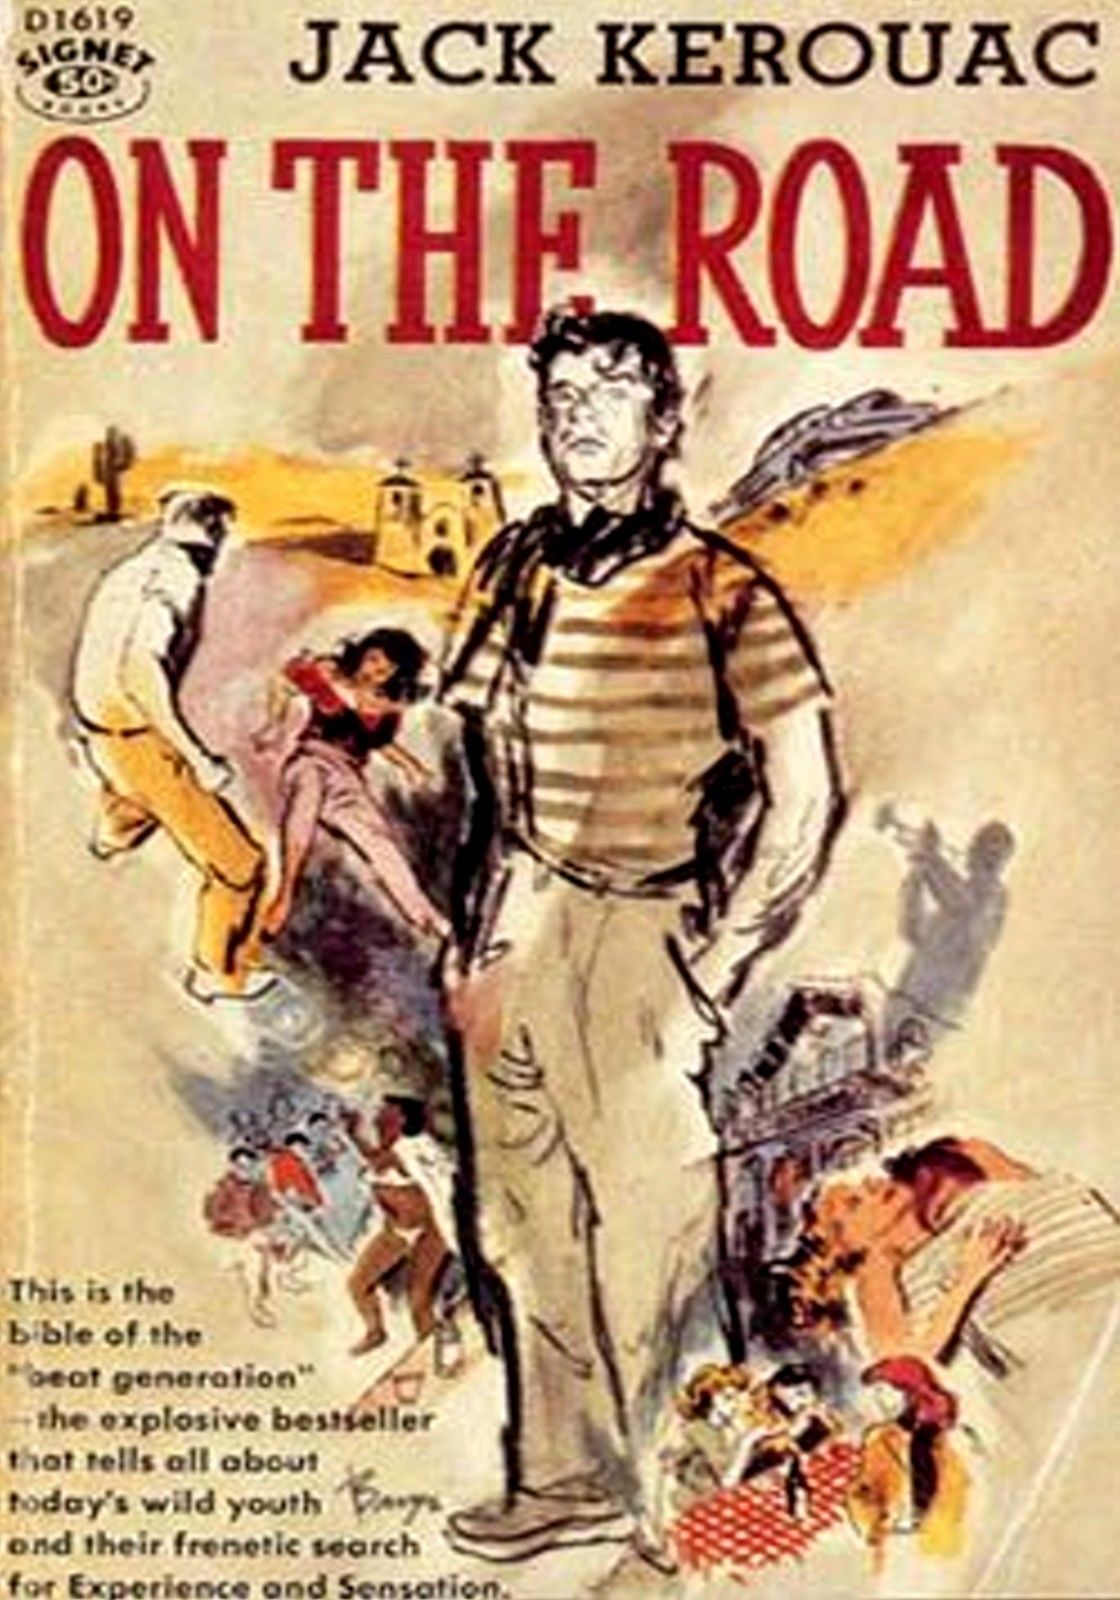 Jack Kerouac's On the Road